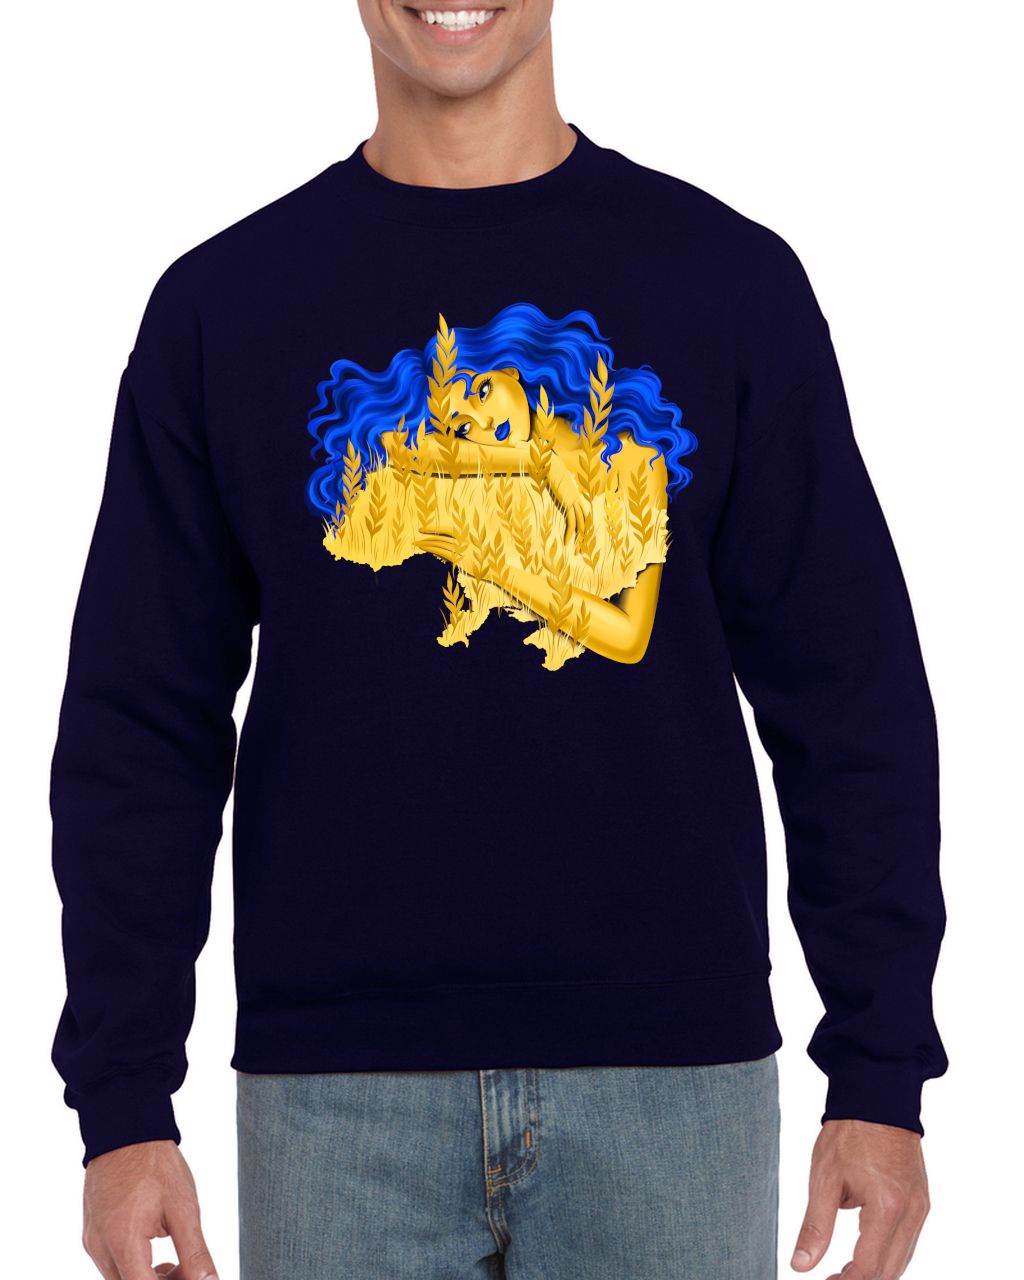 Adult unisex sweatshirt "Berehynia"